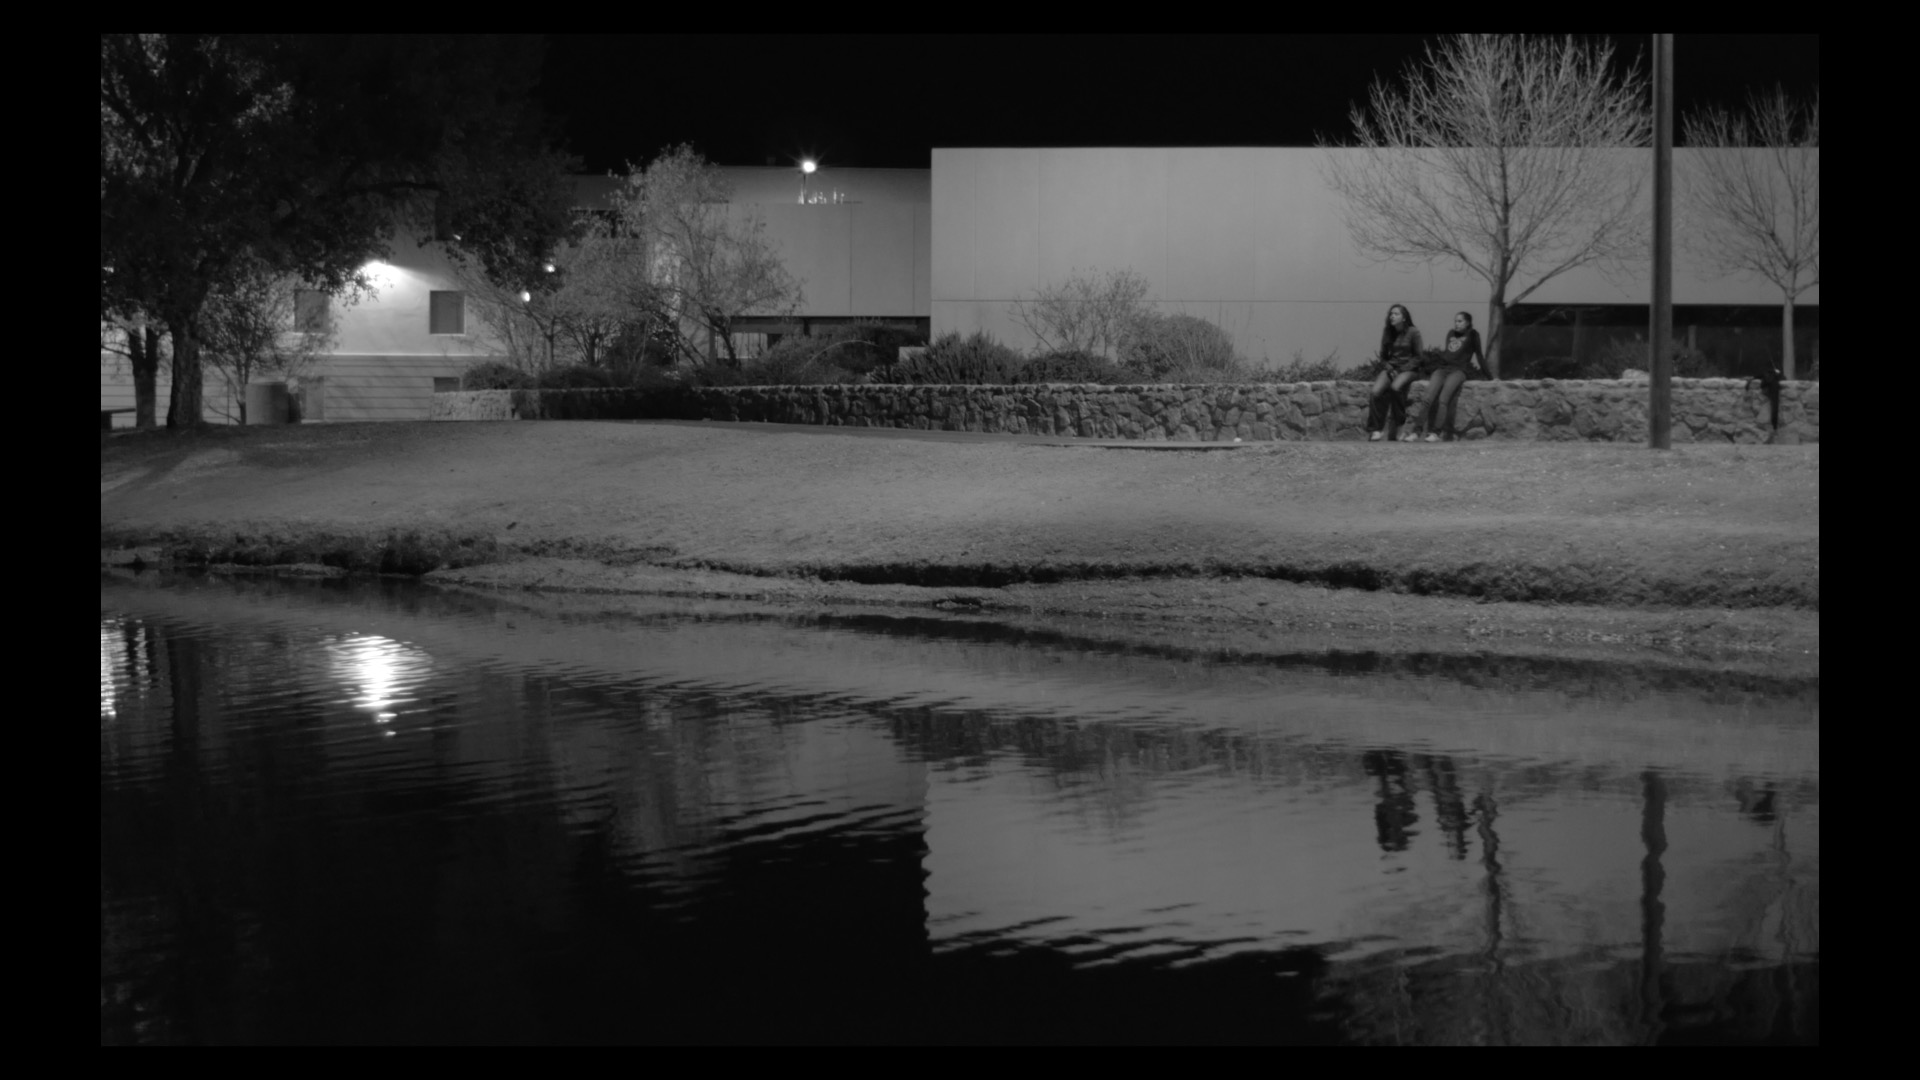 screen grab of film, two people siting in the dark